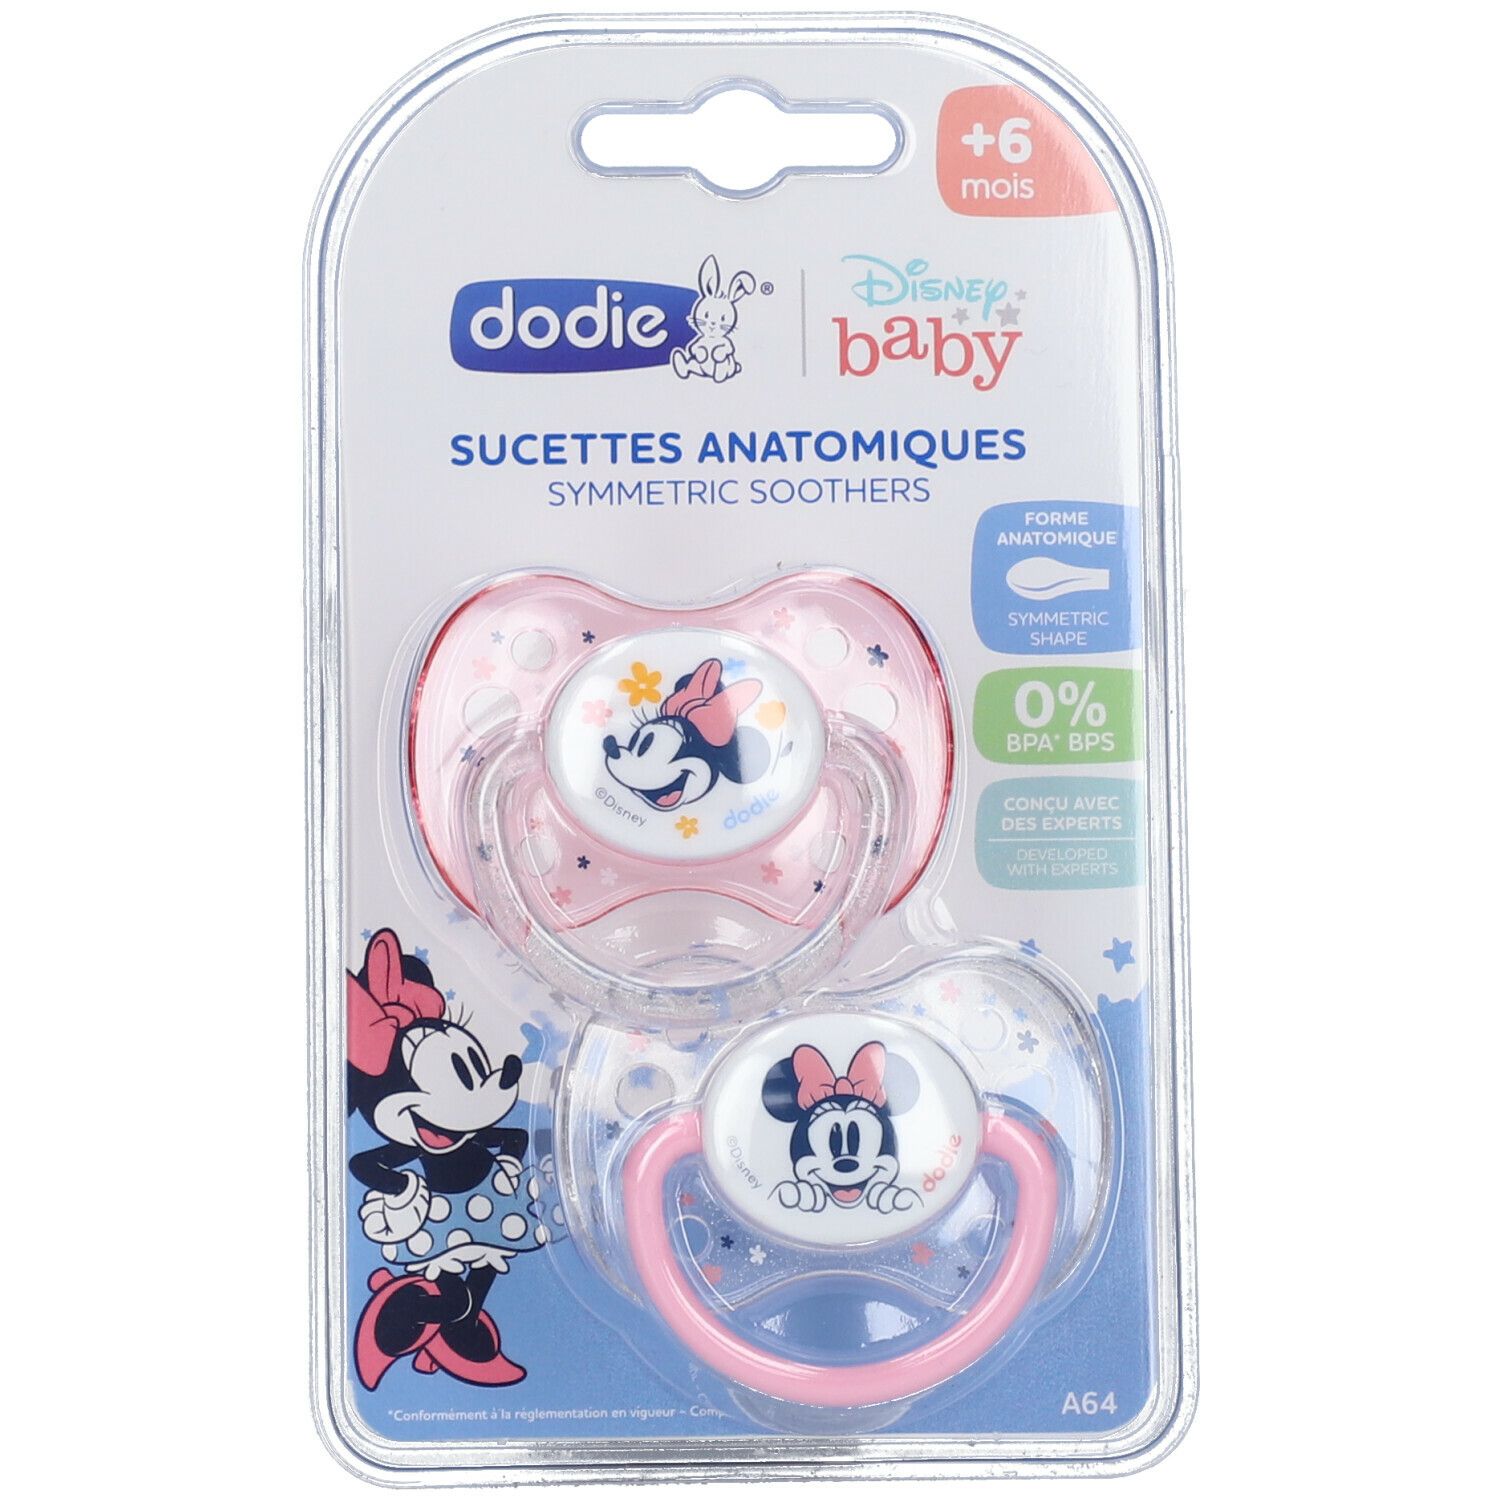 dodie® Sucette Anatomiques +6 mois 'Duo Minnie' silicone avec anneau